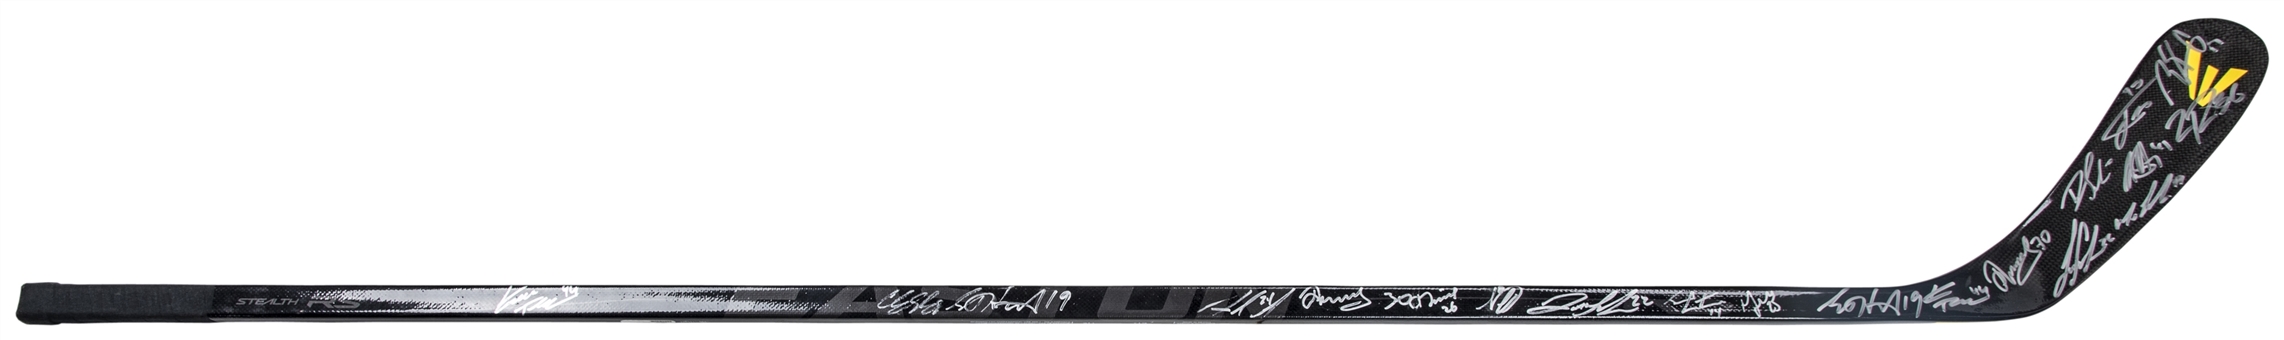 2012-13 Kimmo Timonen Game Used & Multi Signed Easton Hockey Stick with 20 Signatures - Gifted to Orest Kindrachuk (SGC & Kindrachuk LOA)